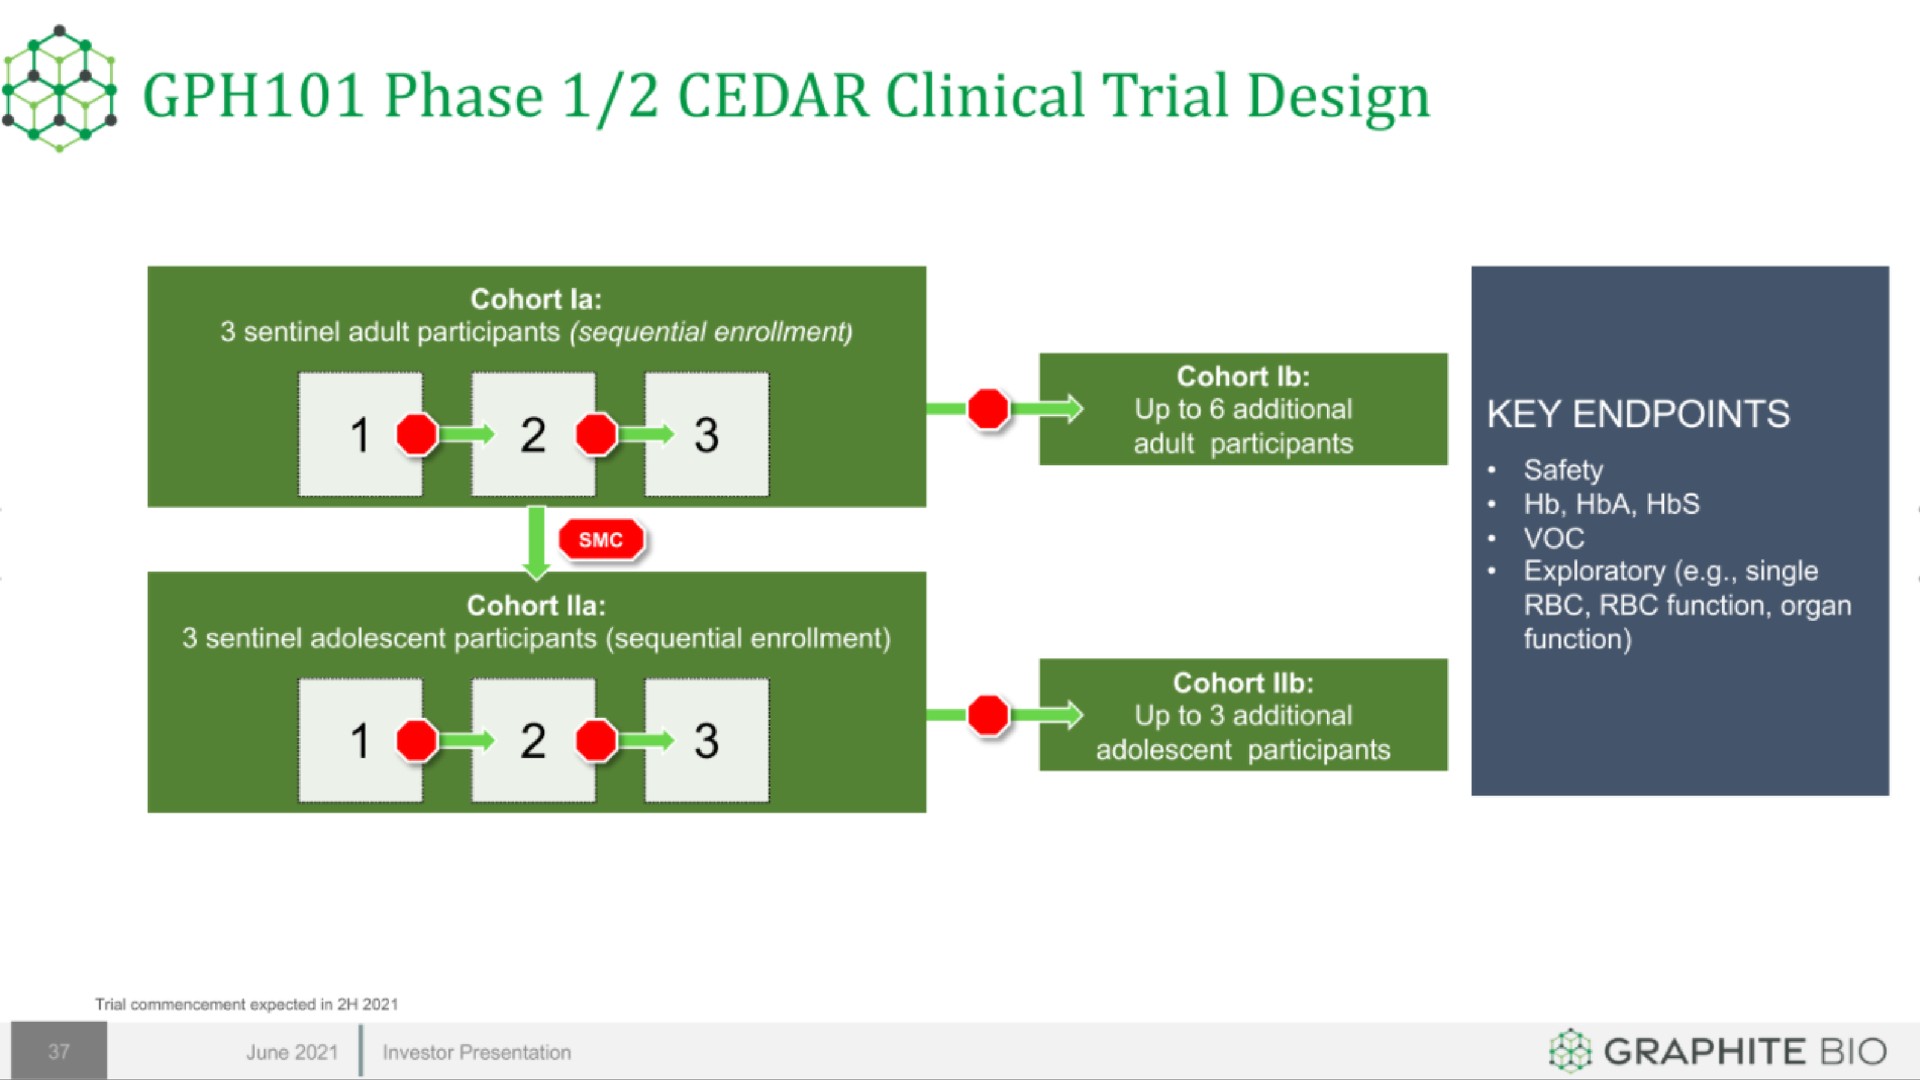 phase cedar clinical trial design | Graphite Bio